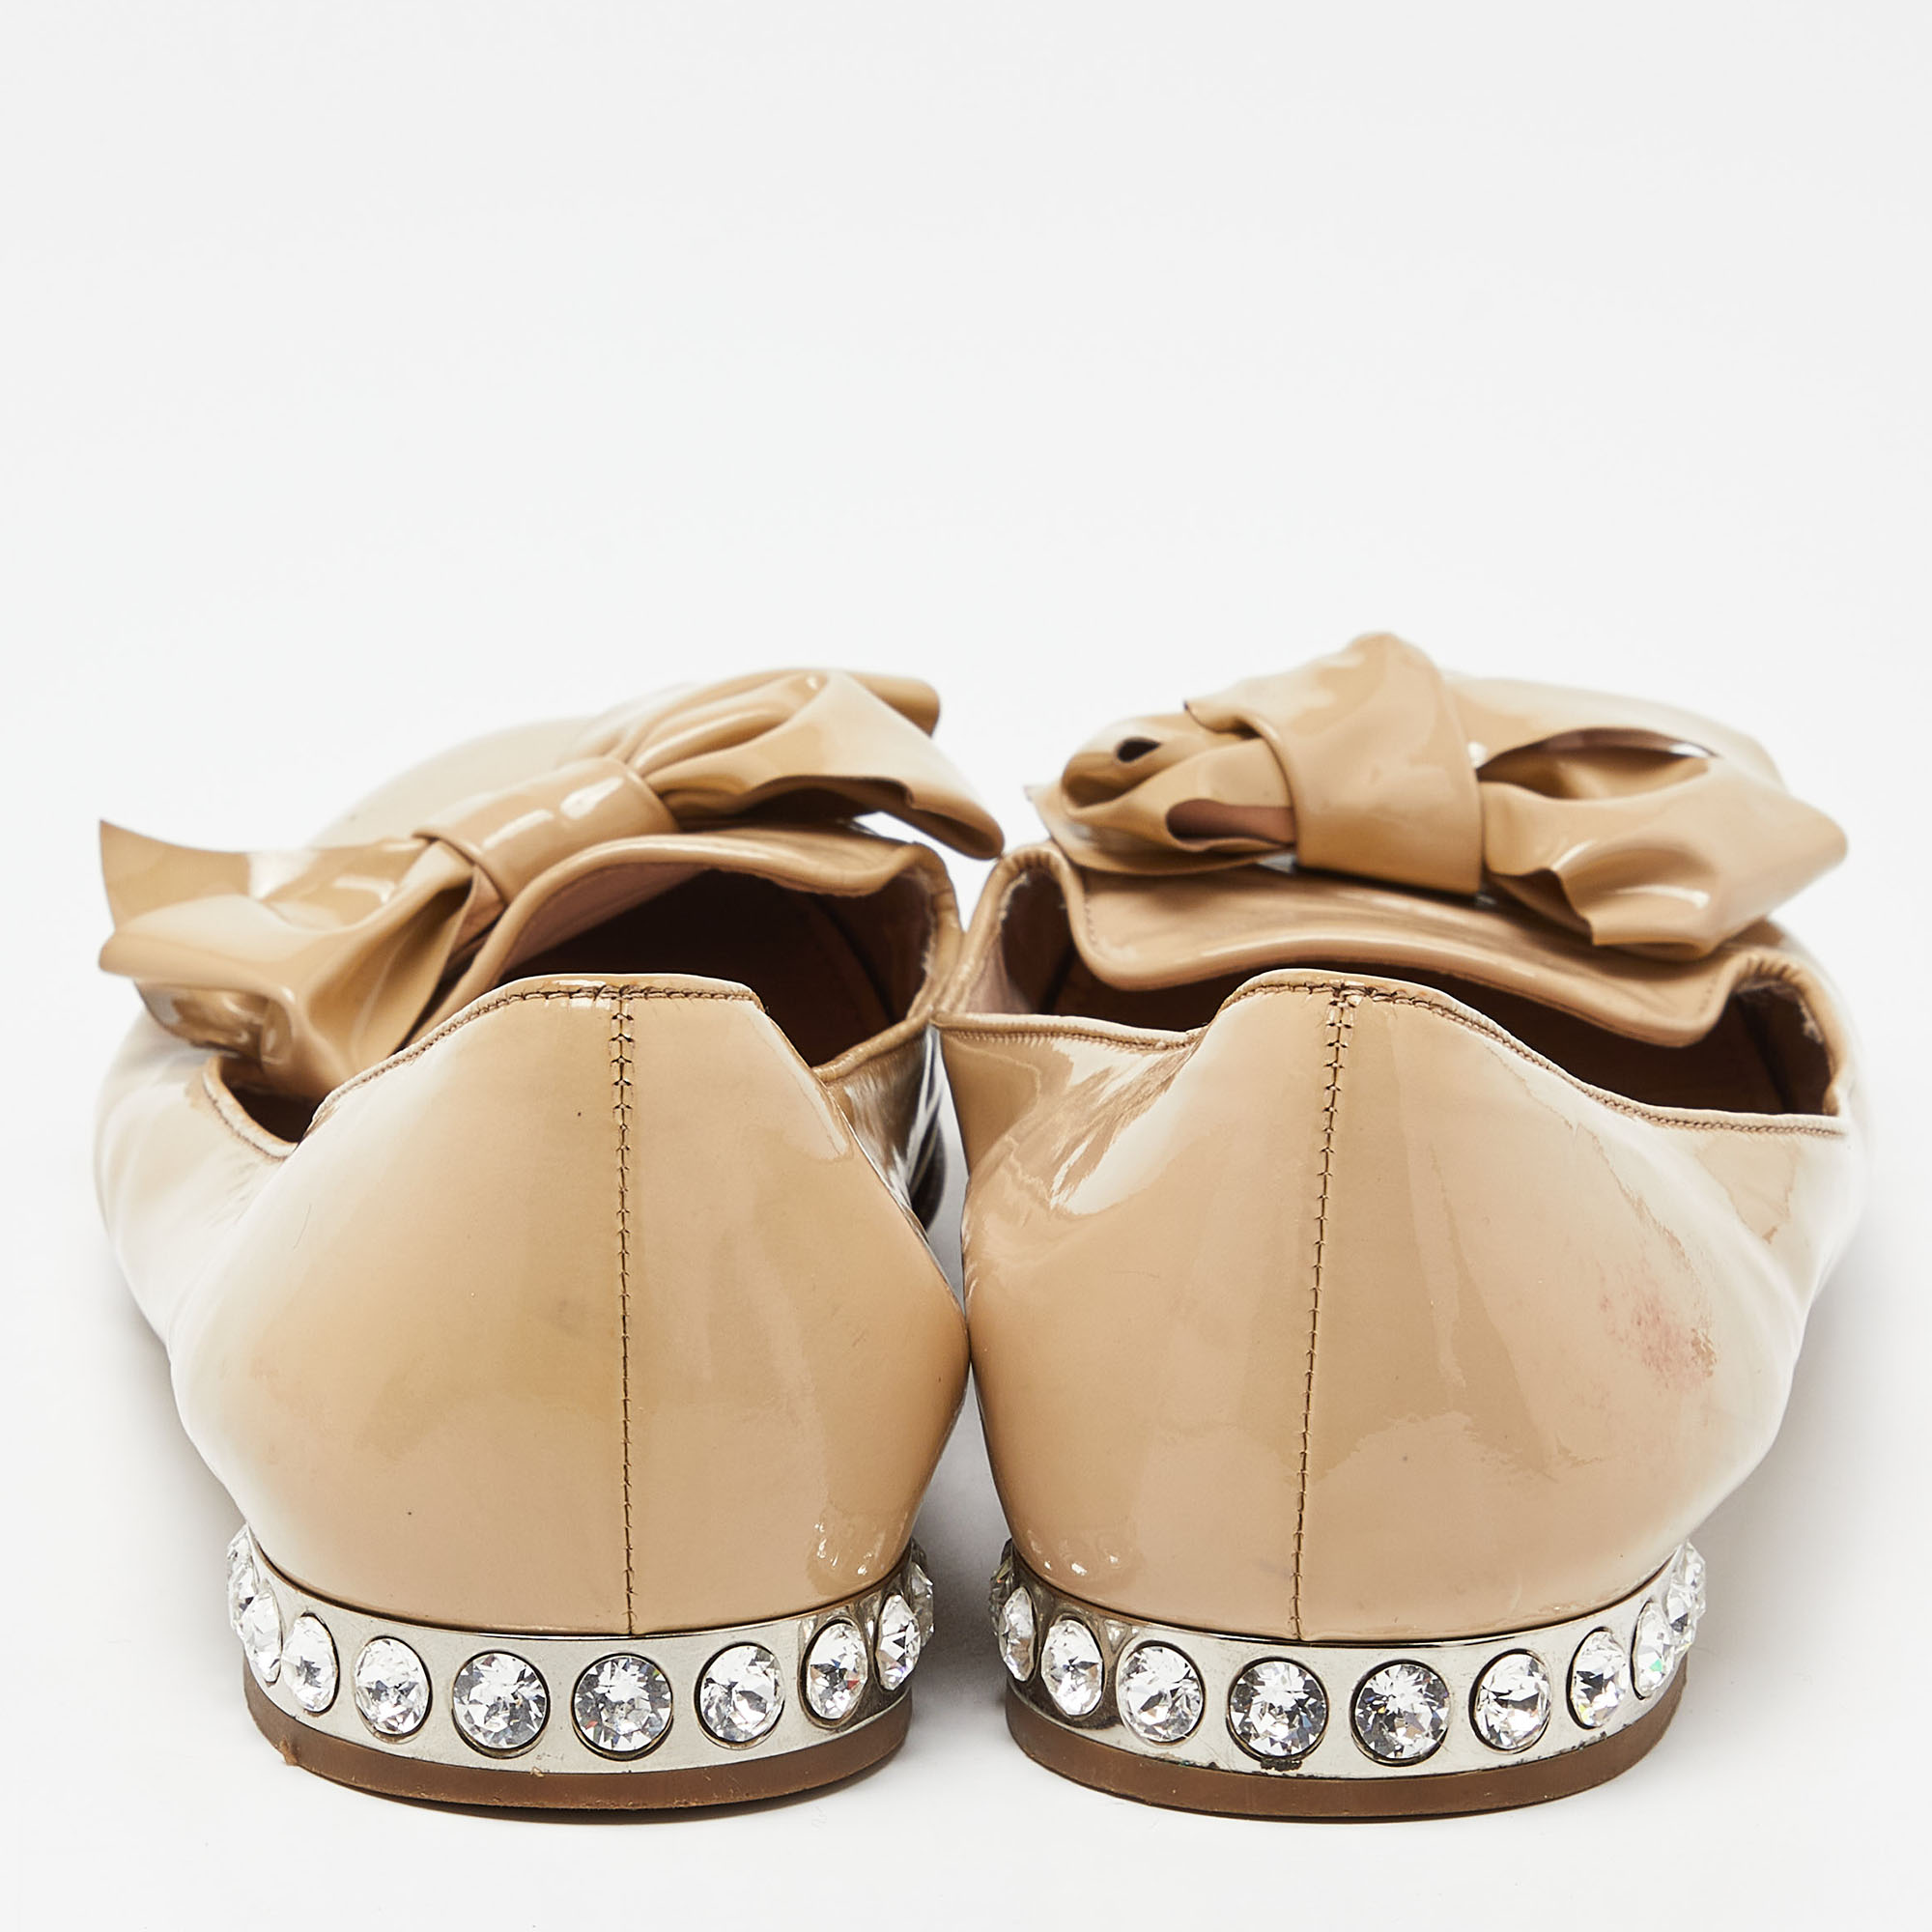 Miu Miu Beige Patent Leather Bow Detail Crystal Embellished Heel Ballet Flats Size 39